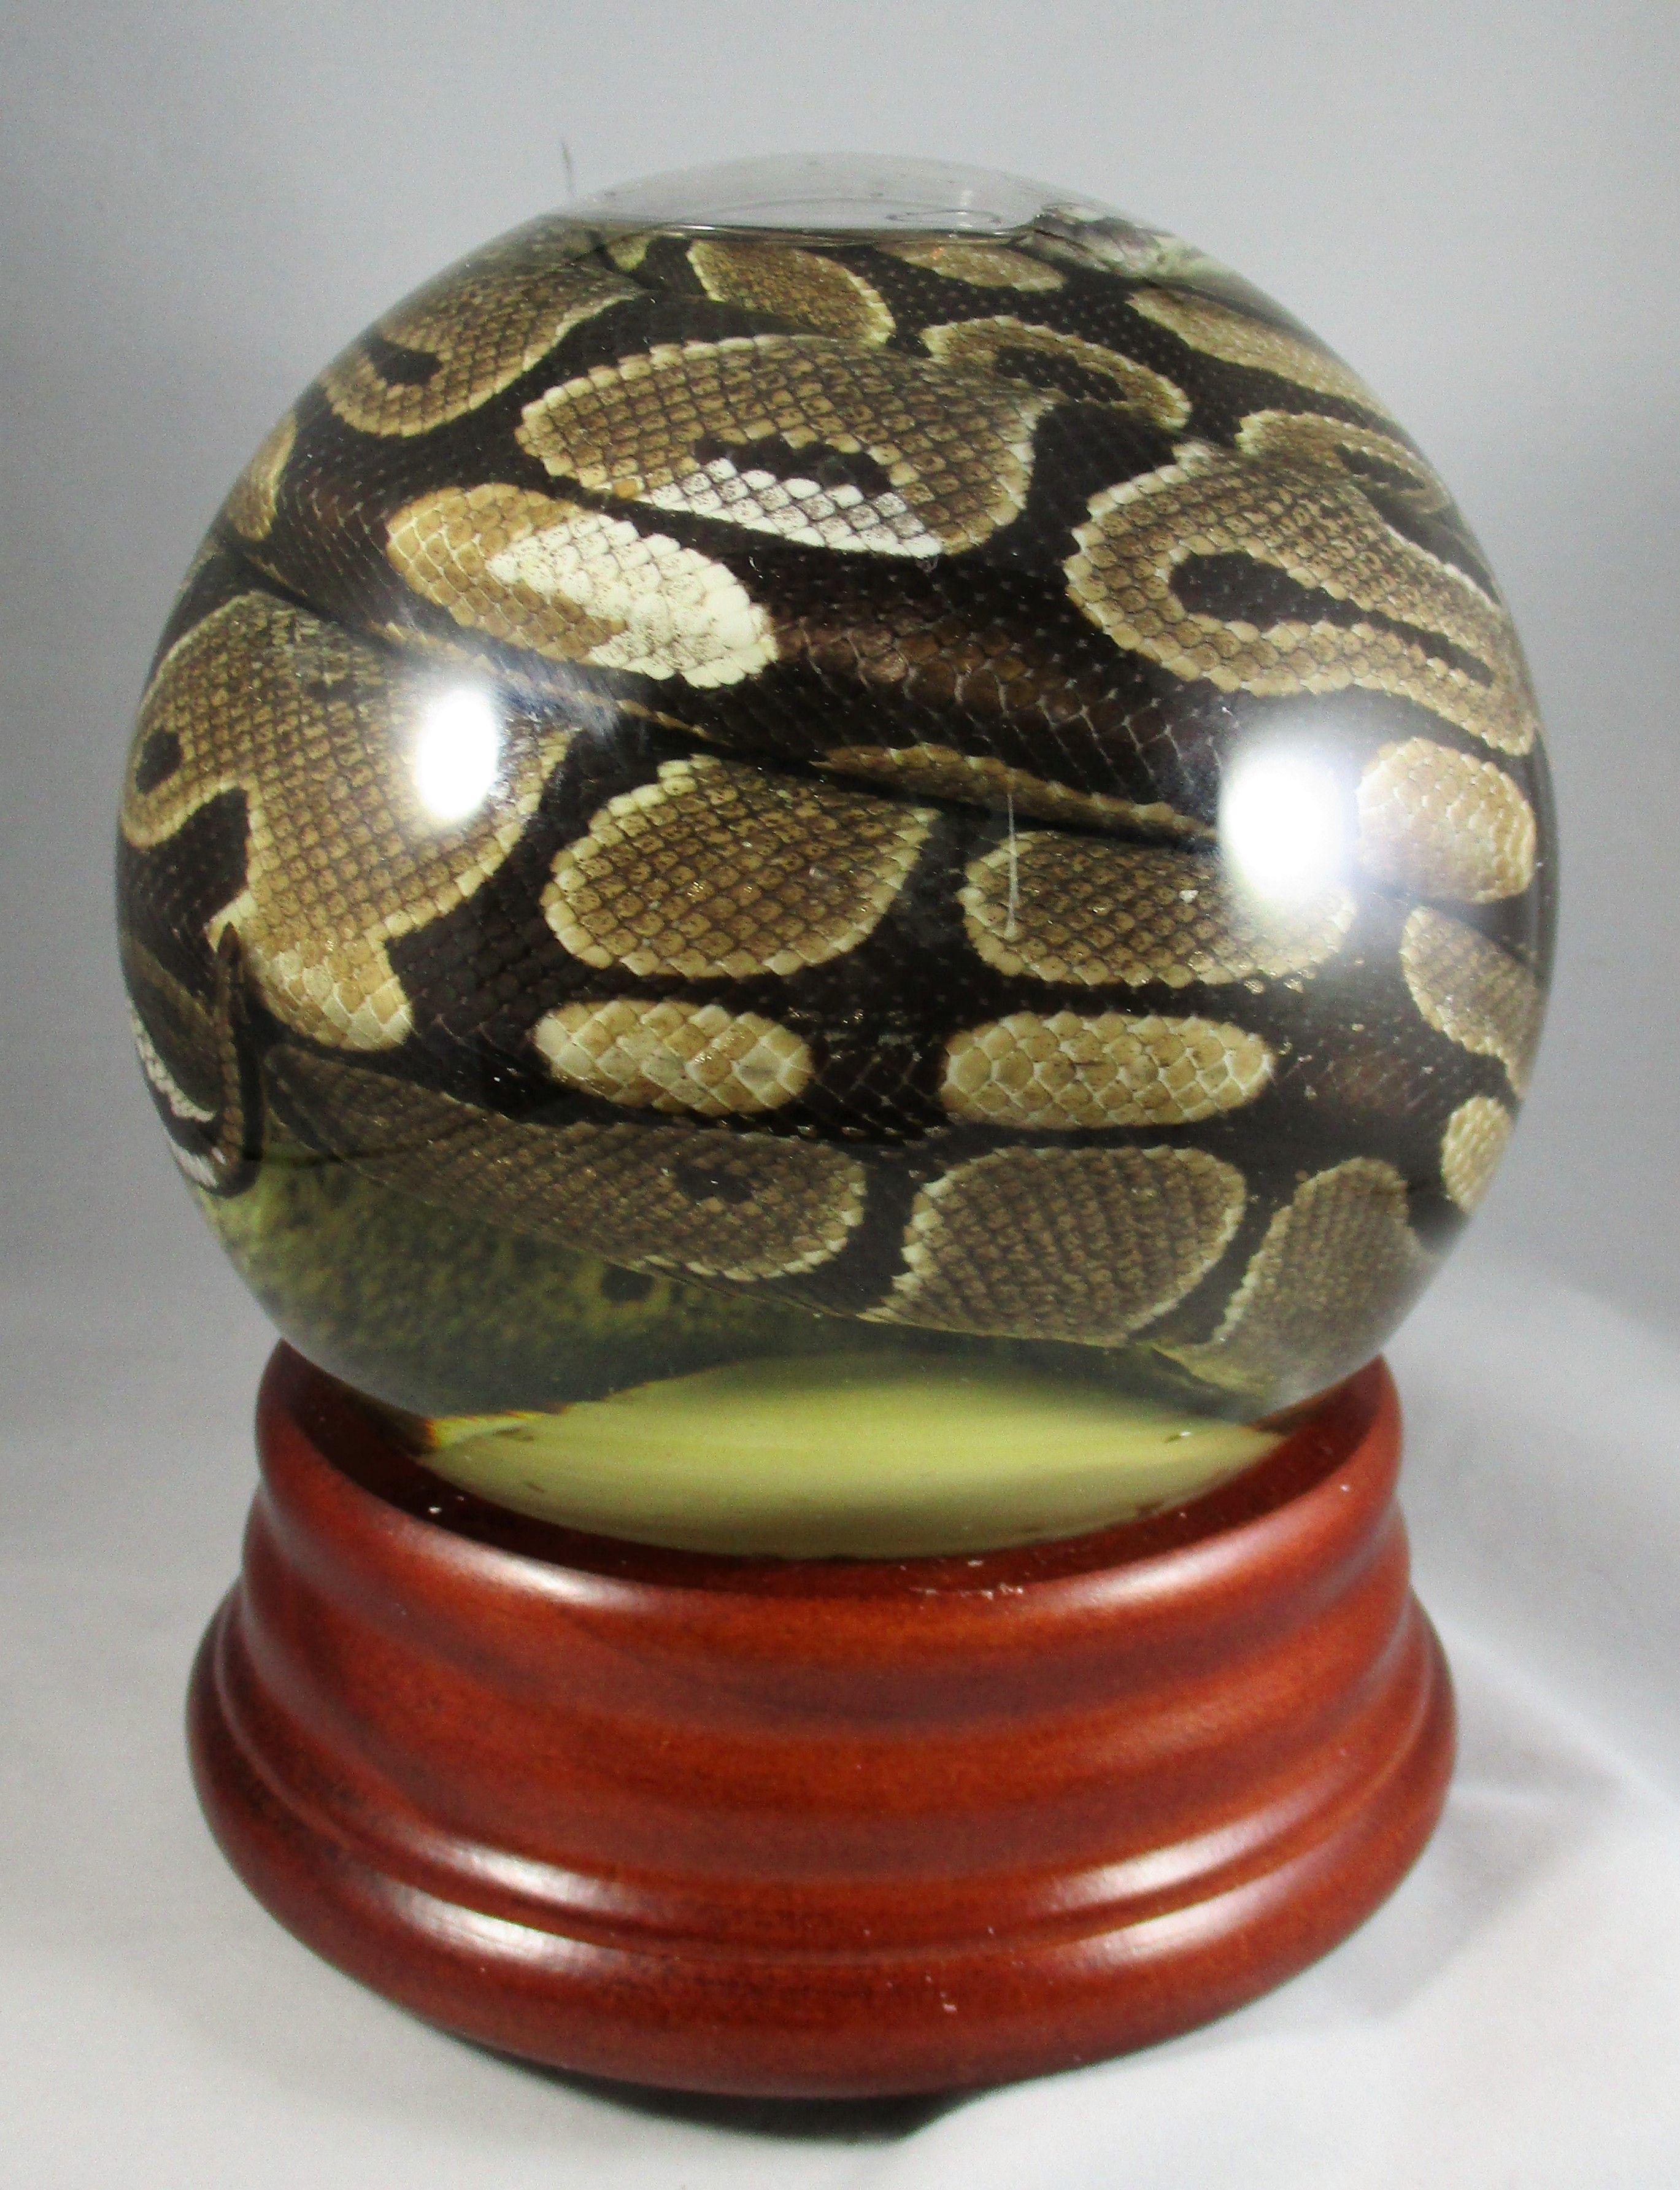 Snake with Globe Logo - Snake Globe - 6 Inch - Mz. Jones' Curiosities